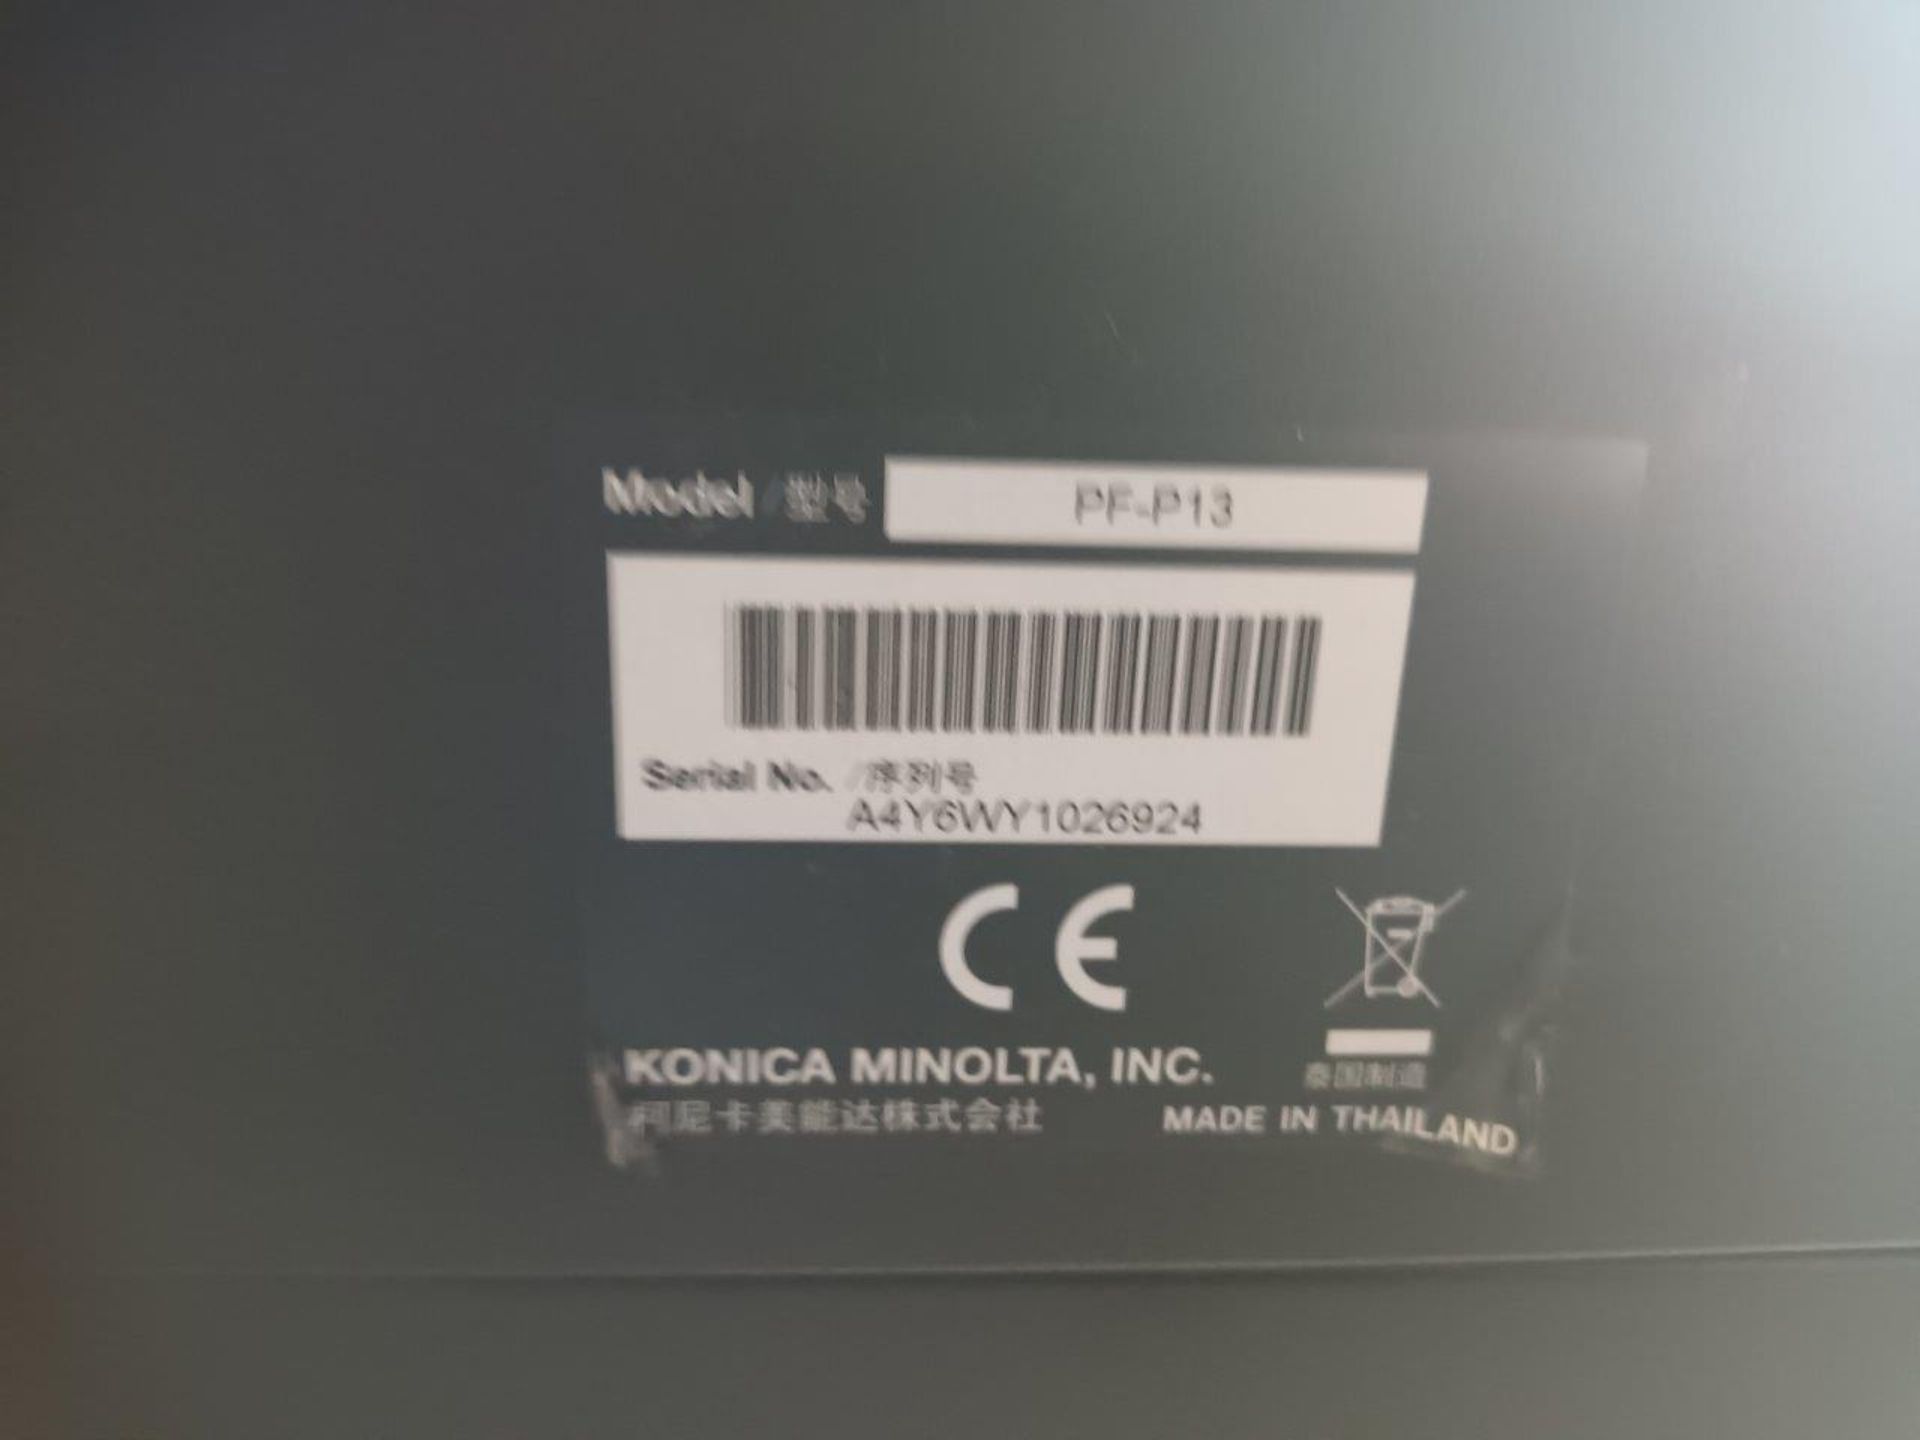 Konica Minolta Bizhub C3350 copier - Image 3 of 4